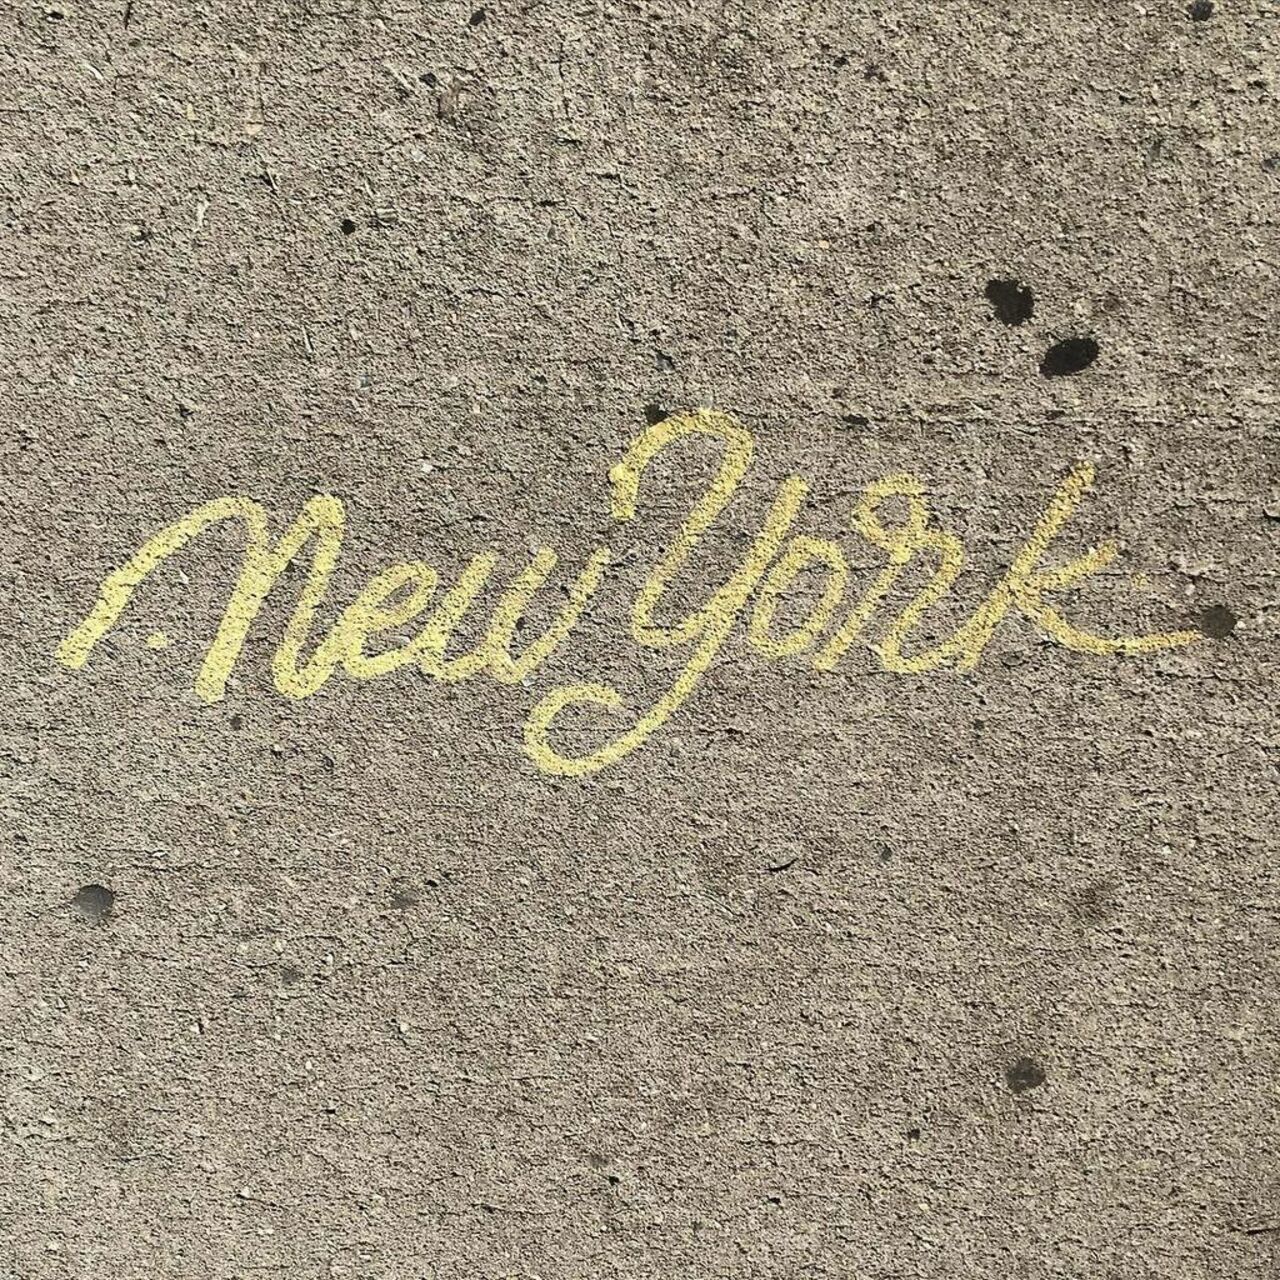 Ground Graffiti
Bowery Street NYC
#graff #graffiti #graffitinyc #outsider #outsiderart #street #streetart #streetar… https://t.co/0PlBSIDU7q